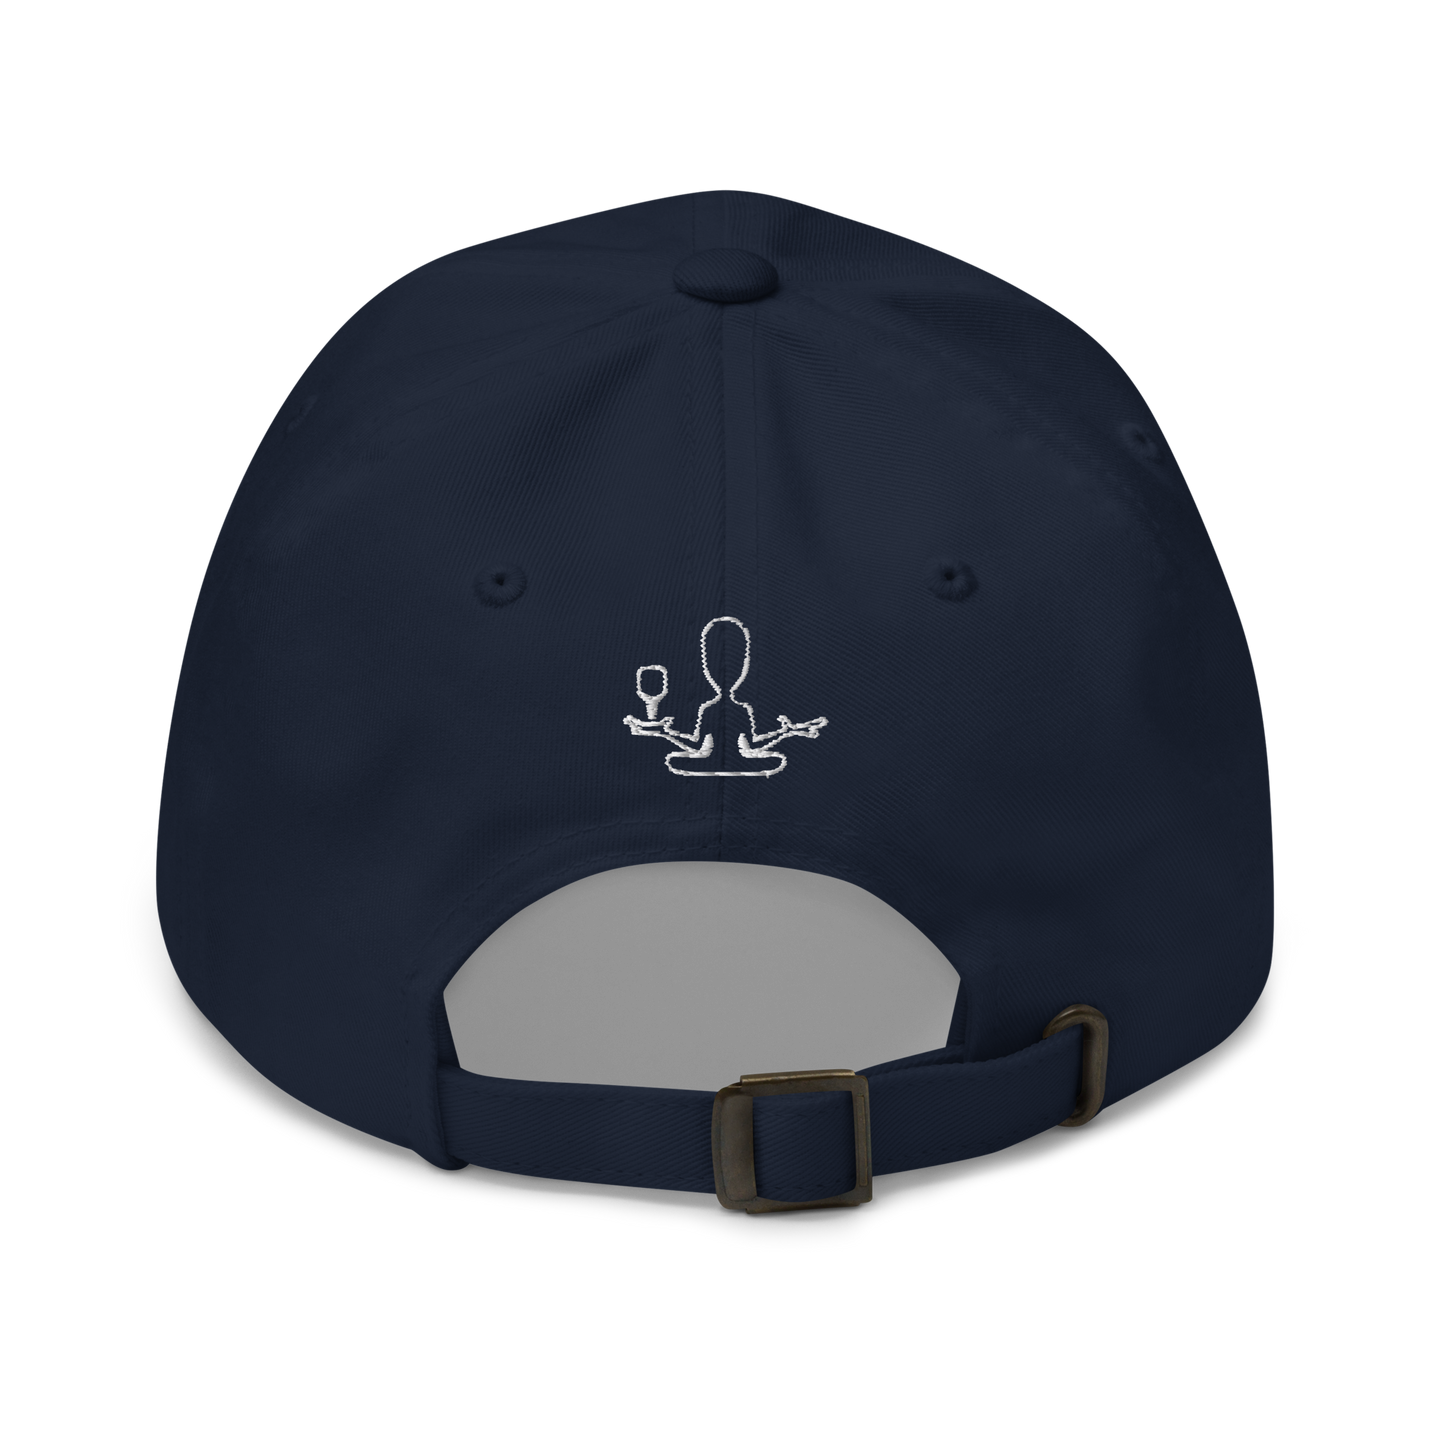 Alameda Pickleball Shield - The Classics Hat (Yupoong) MJ236